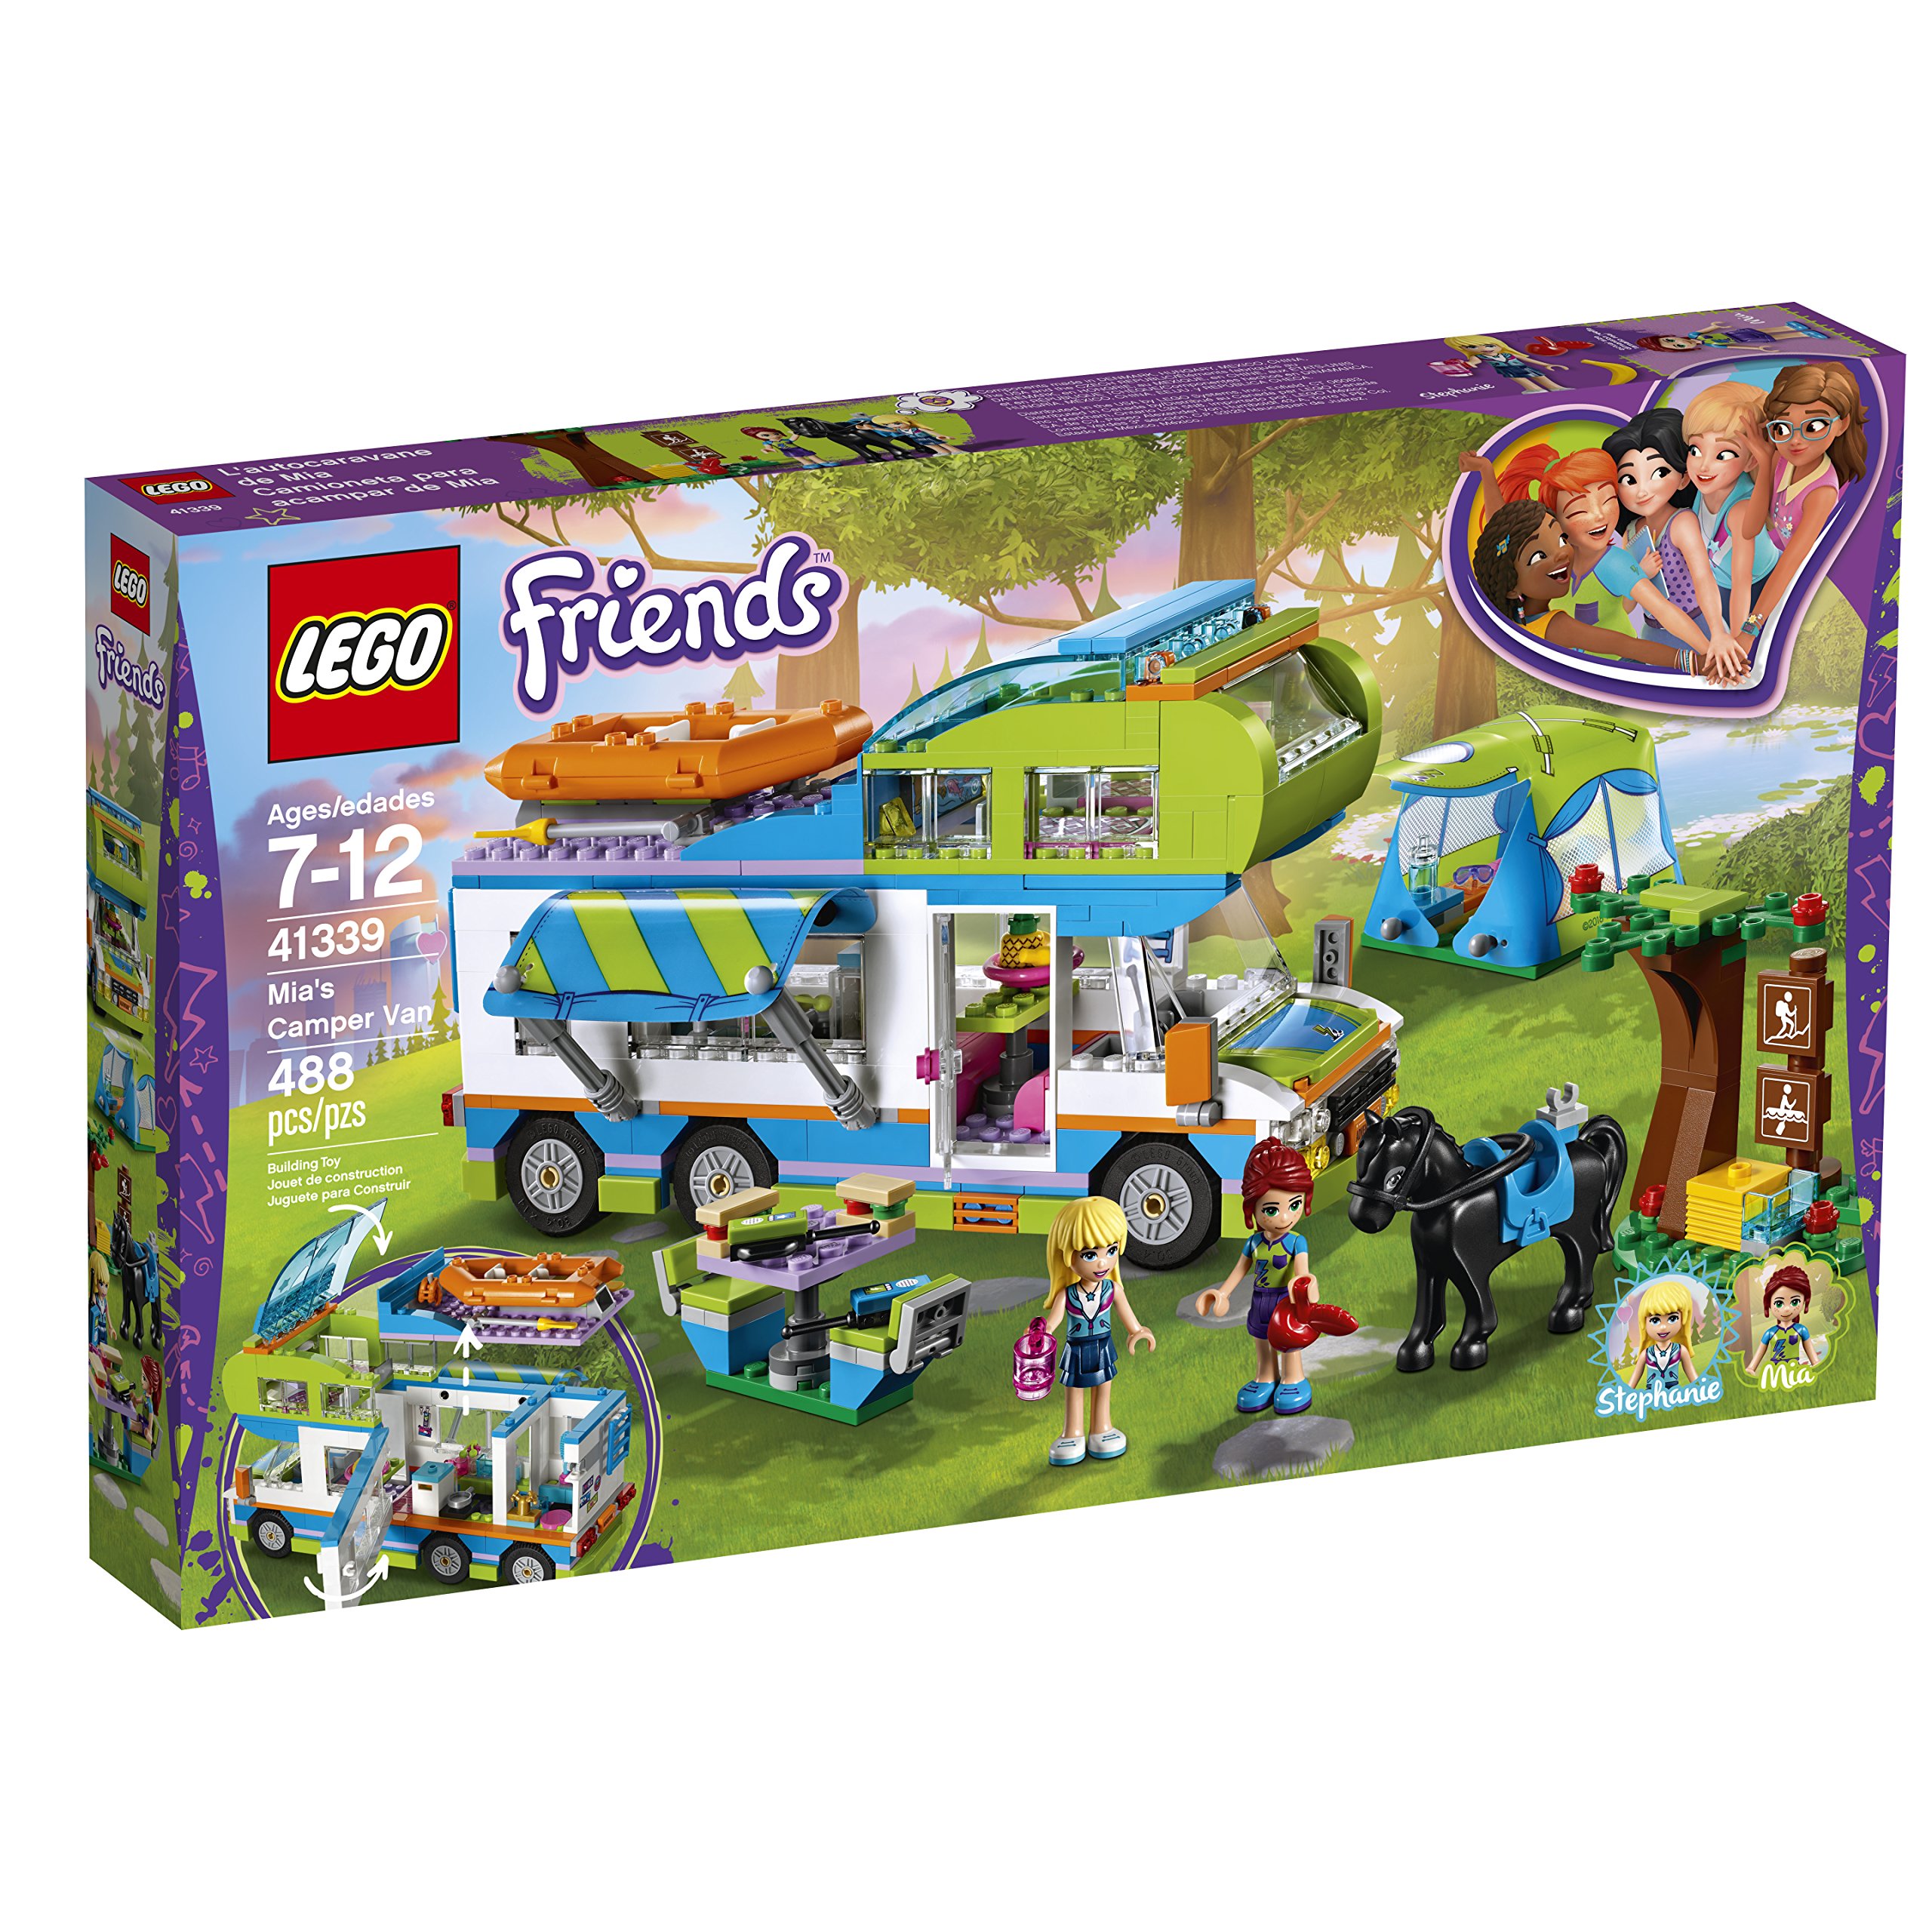 LEGO Friends Mia's Camper Van 41339 Building Set (488 Pieces) (Discontinued by Manufacturer)